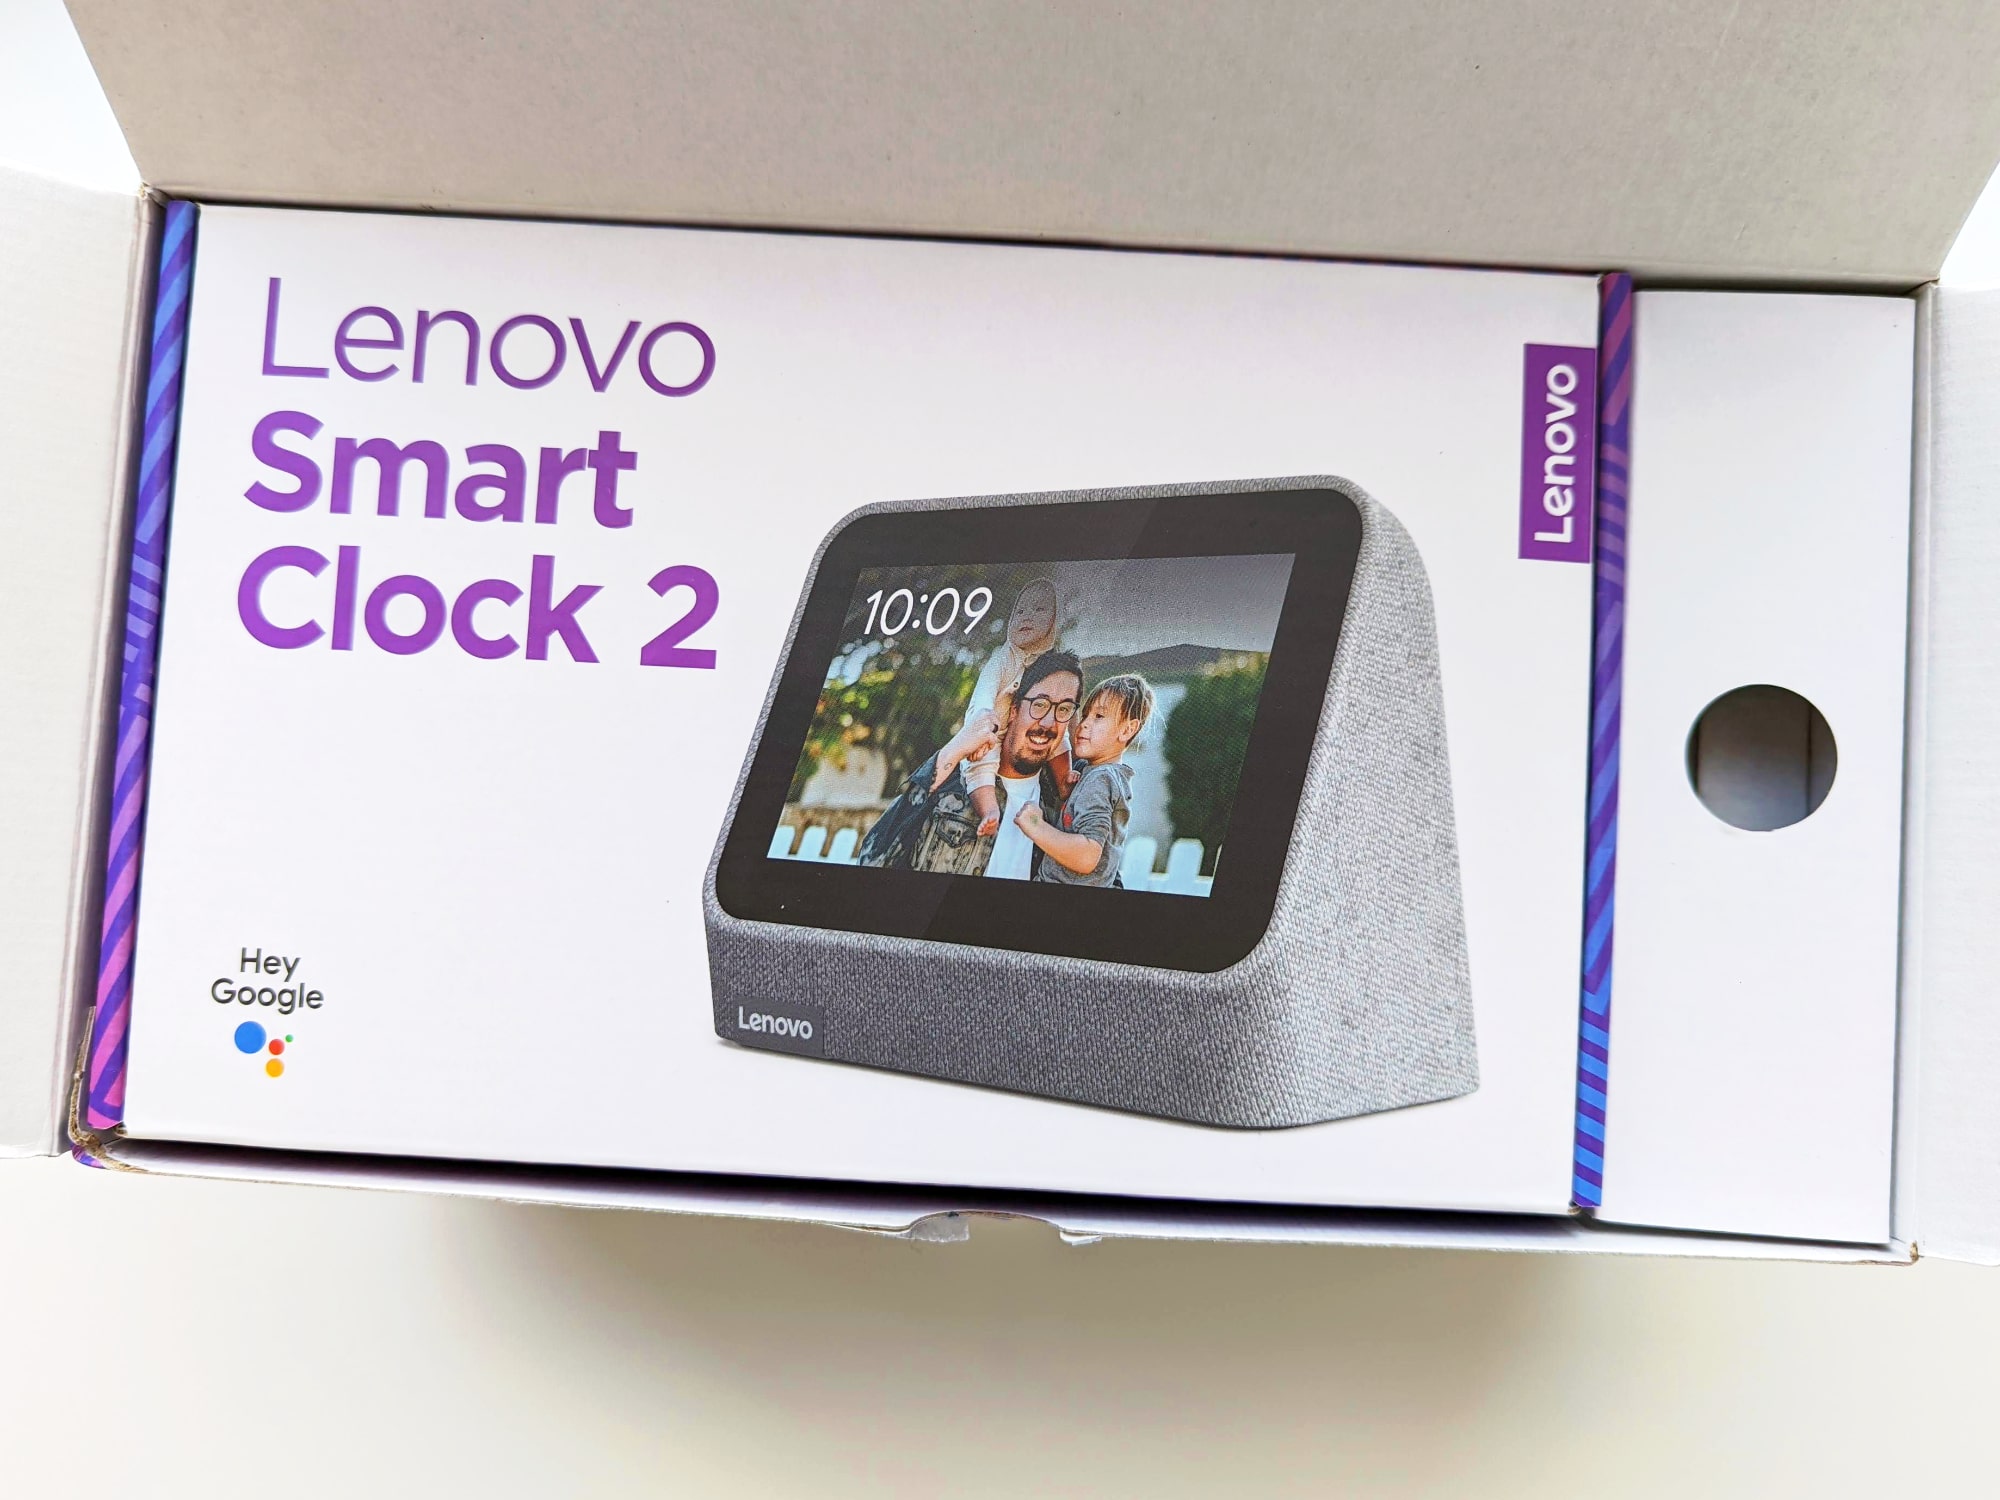 Lenovo Smart Clock 2 - smart alarm clock with charging pad in test